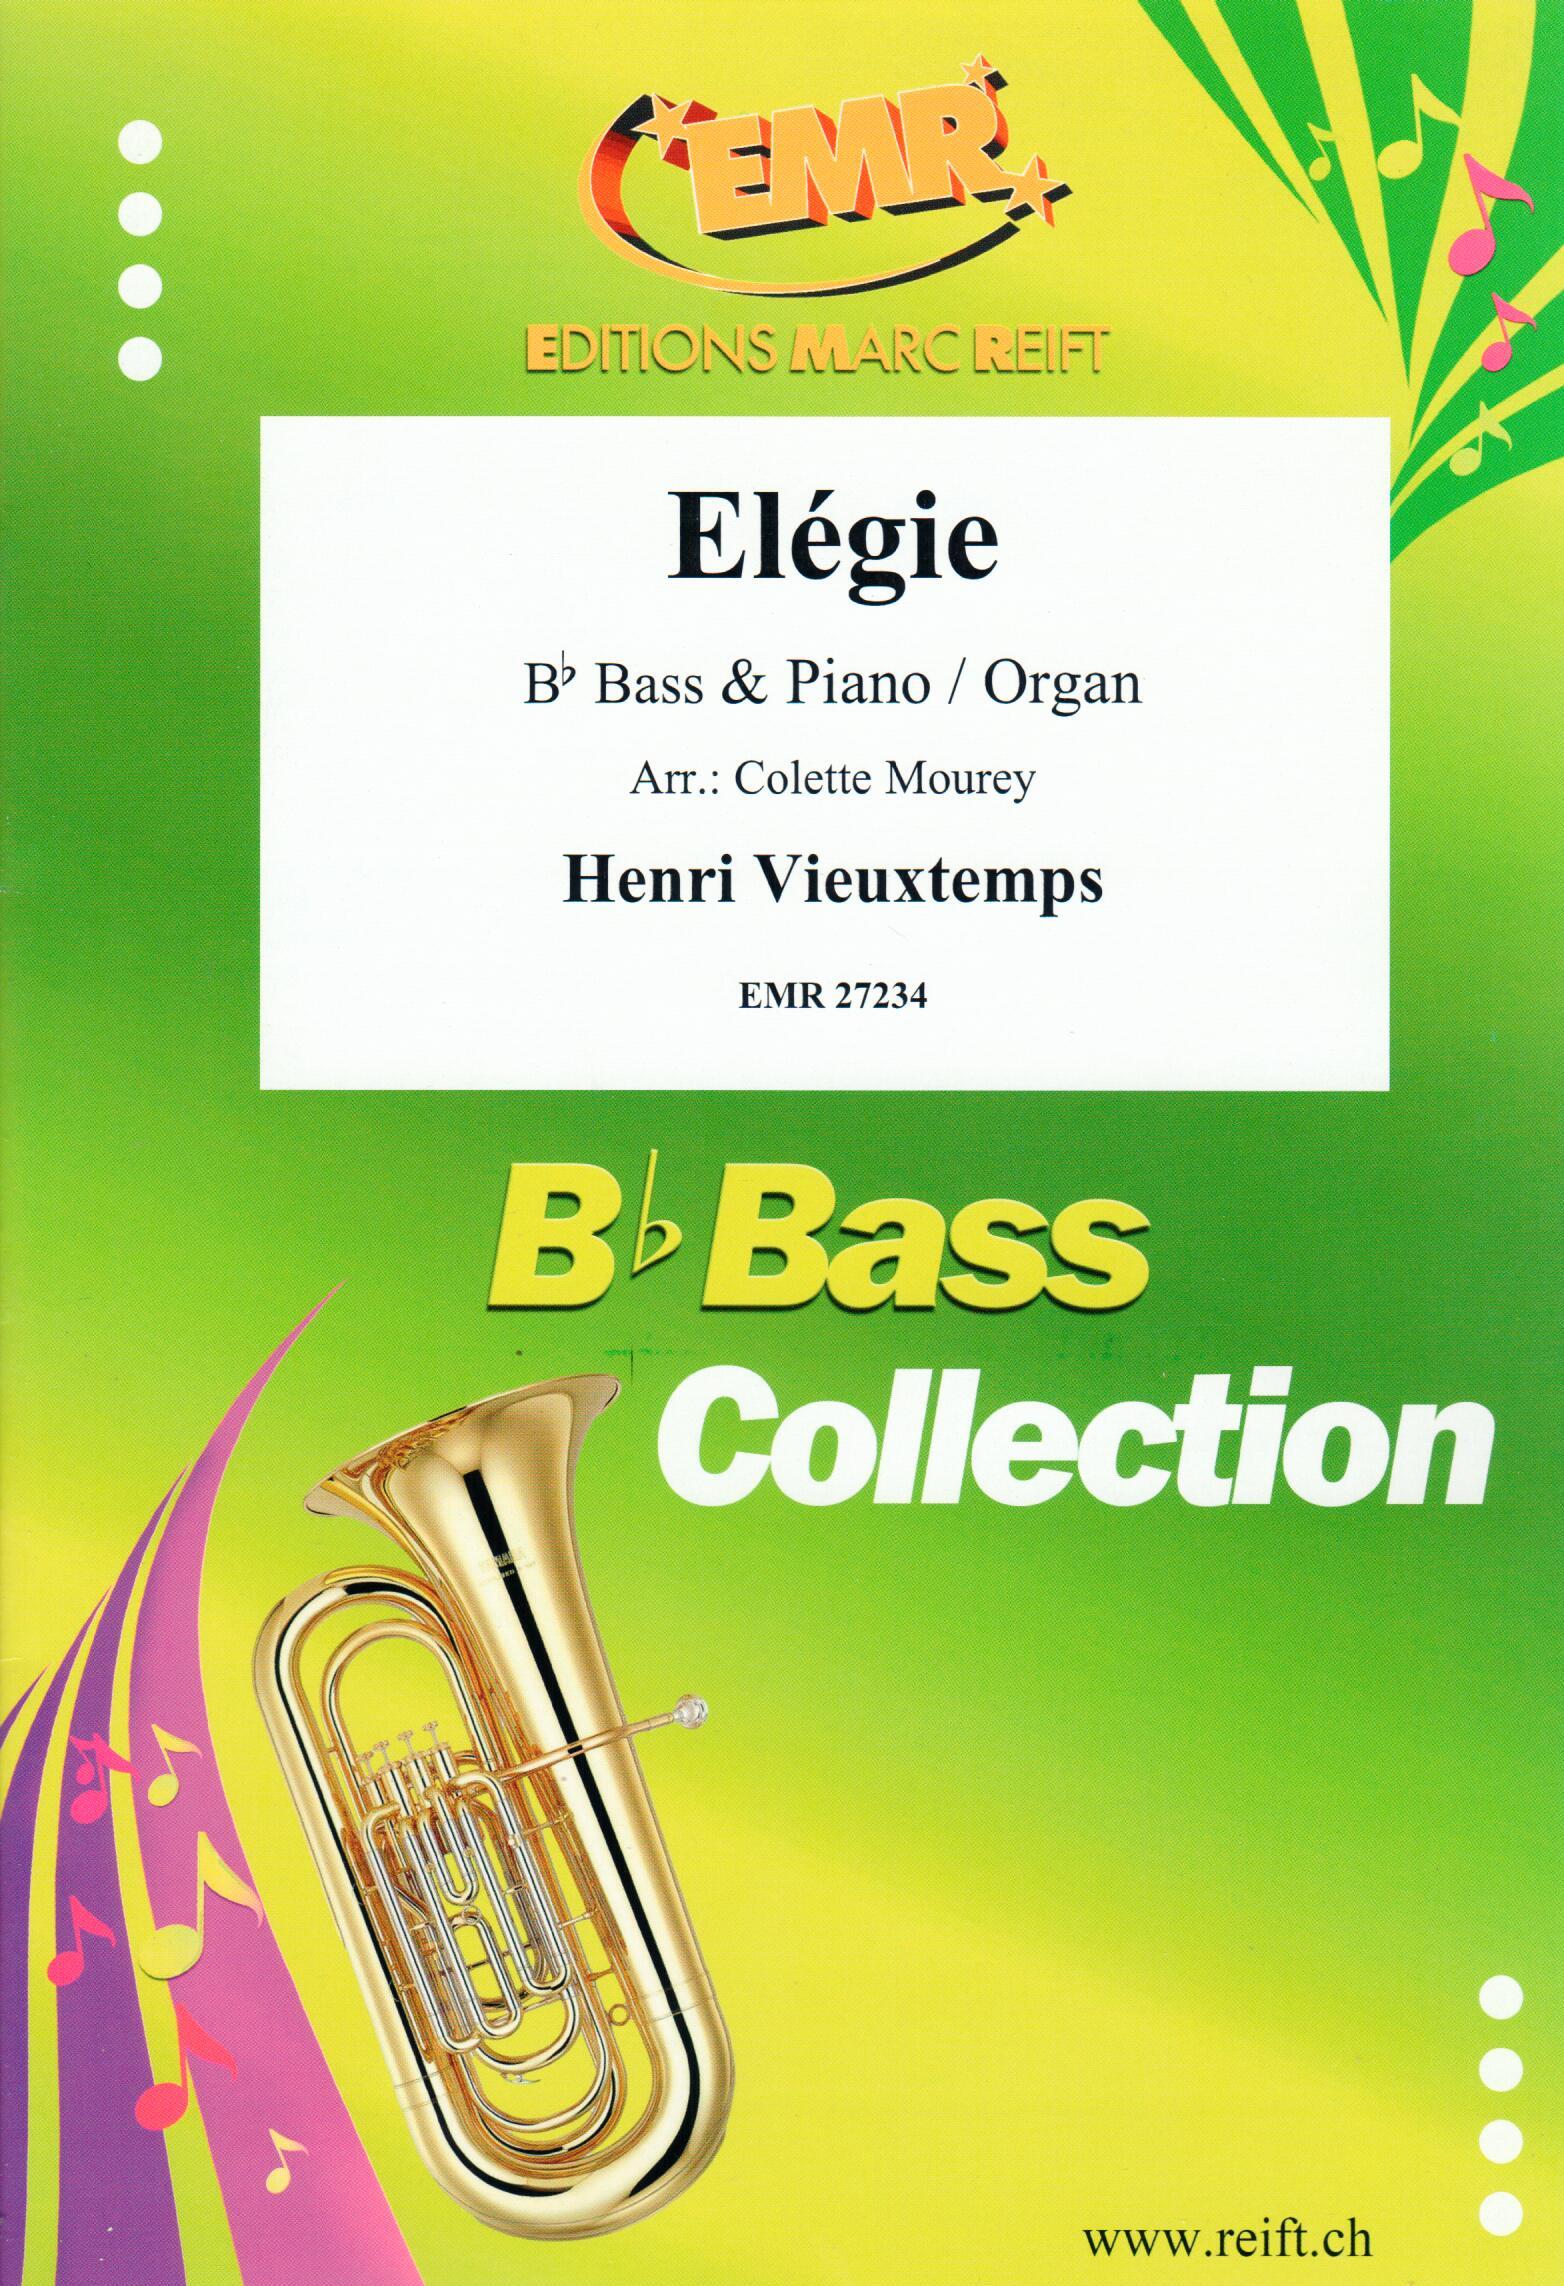 ELéGIE, SOLOS - E♭. Bass